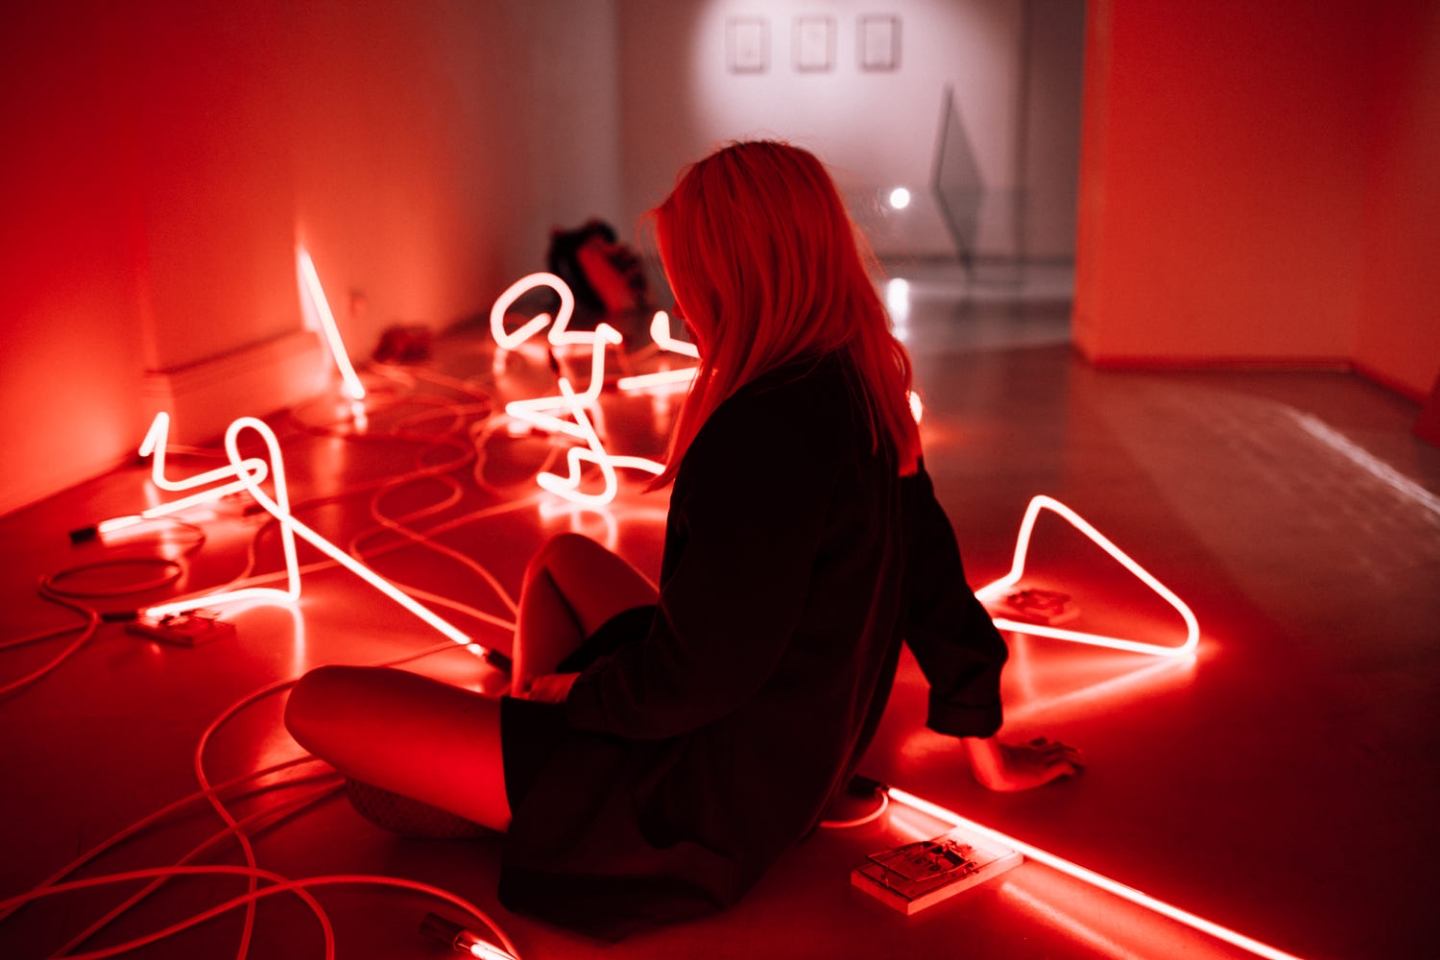 People Women Red Sitting On The Floor Women Indoors LEDs Room Neon Lights 1440x960